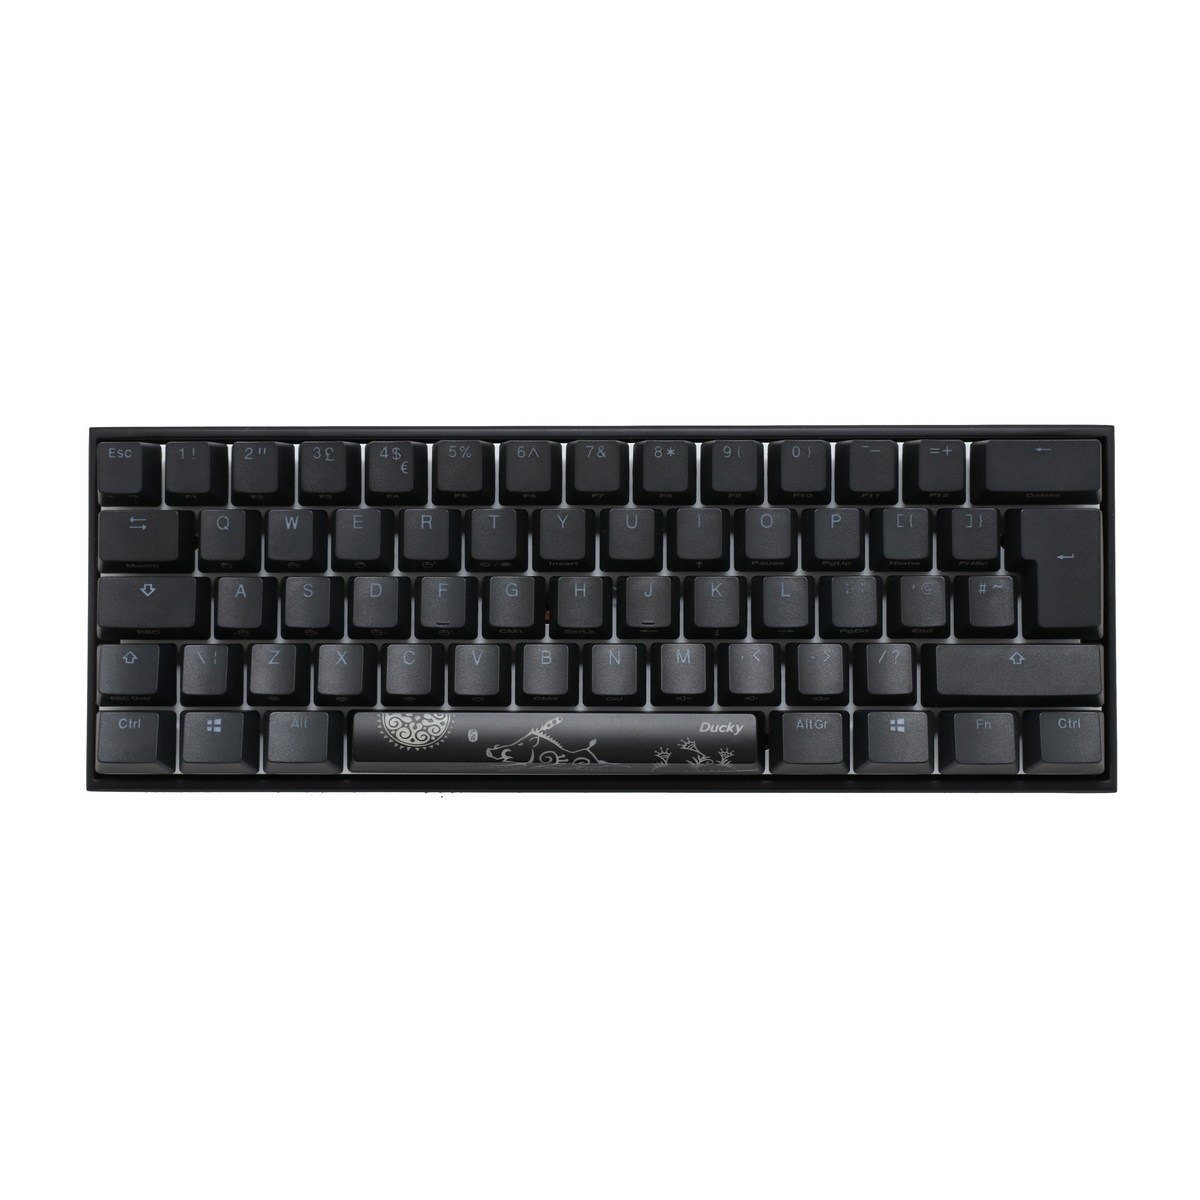 Ducky - Ducky Mecha Mini 60% RGB USB Mechanical Gaming Keyboard - Cherry MX Red UK Layout